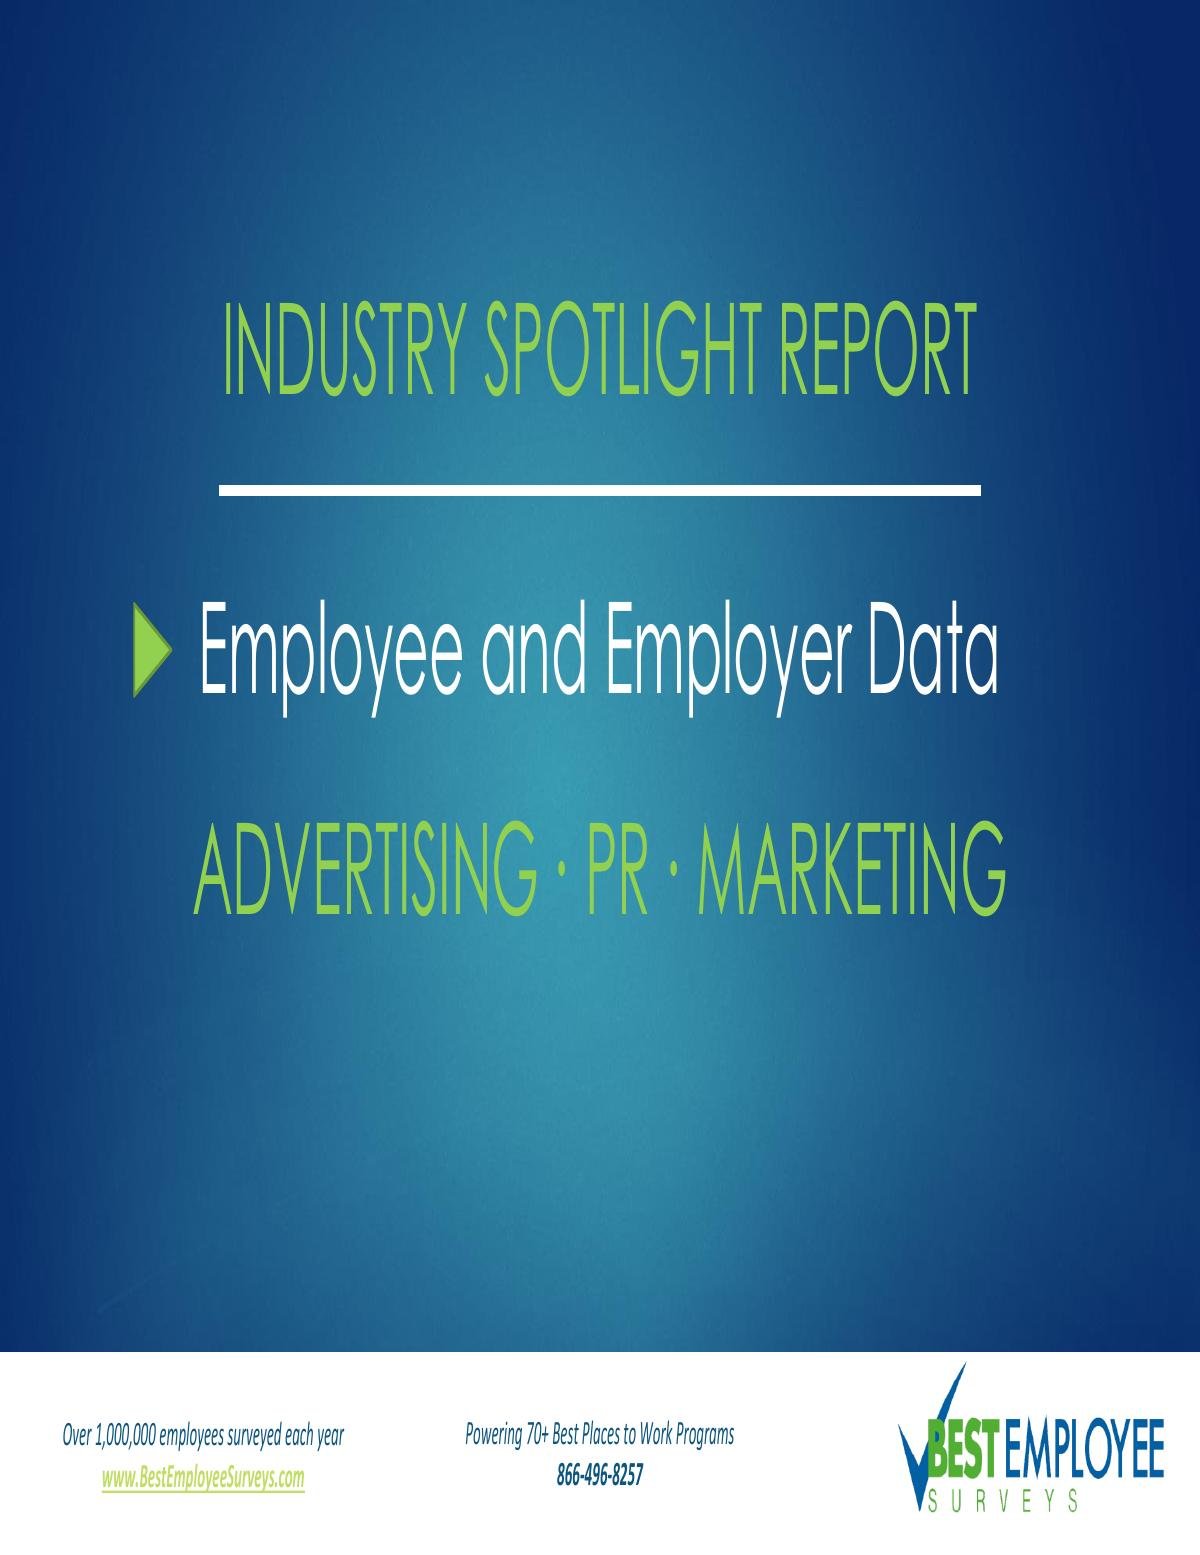 2019 Employee Engagement and Satisfaction Report: Advertising - PR - Marketing